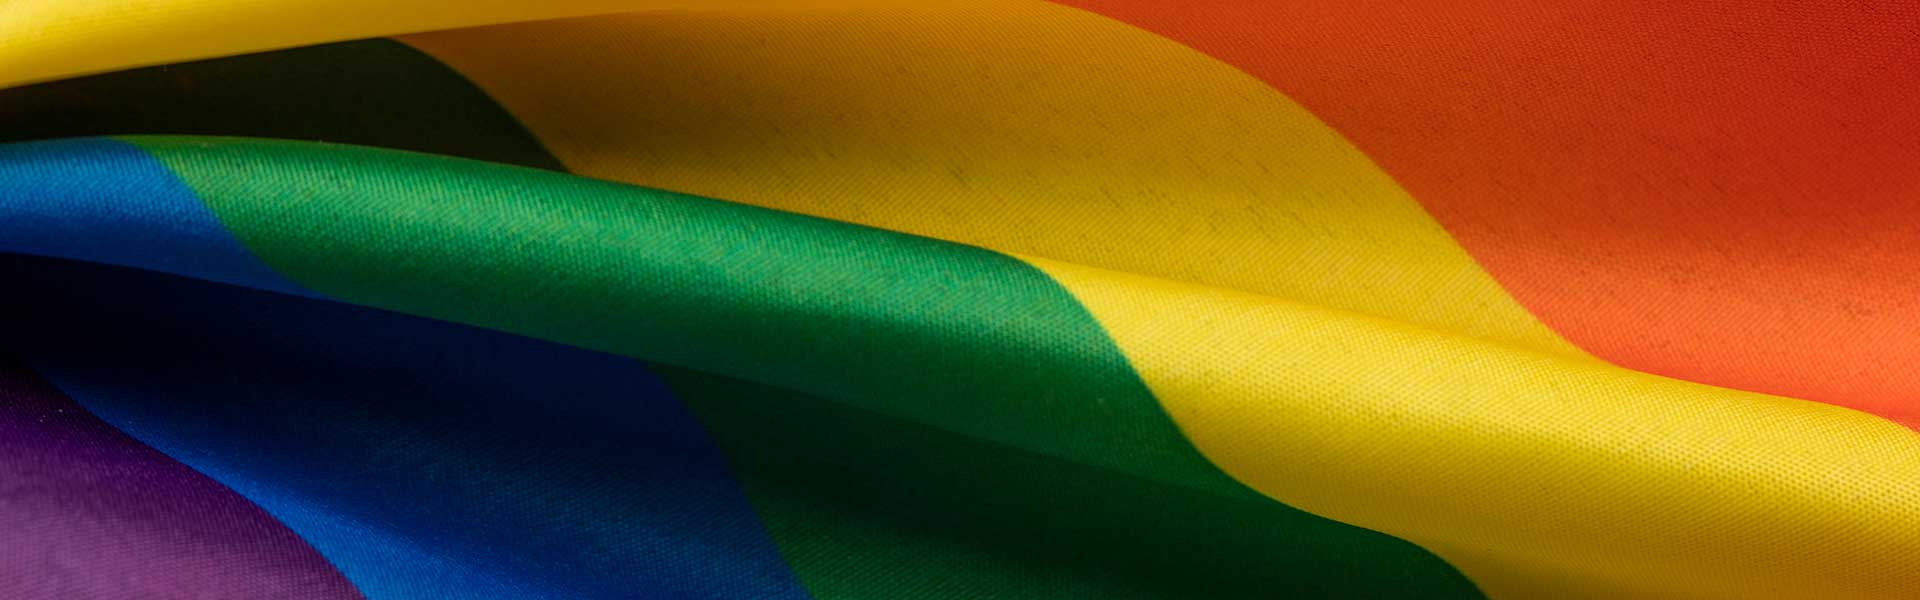 LGBT pride flag